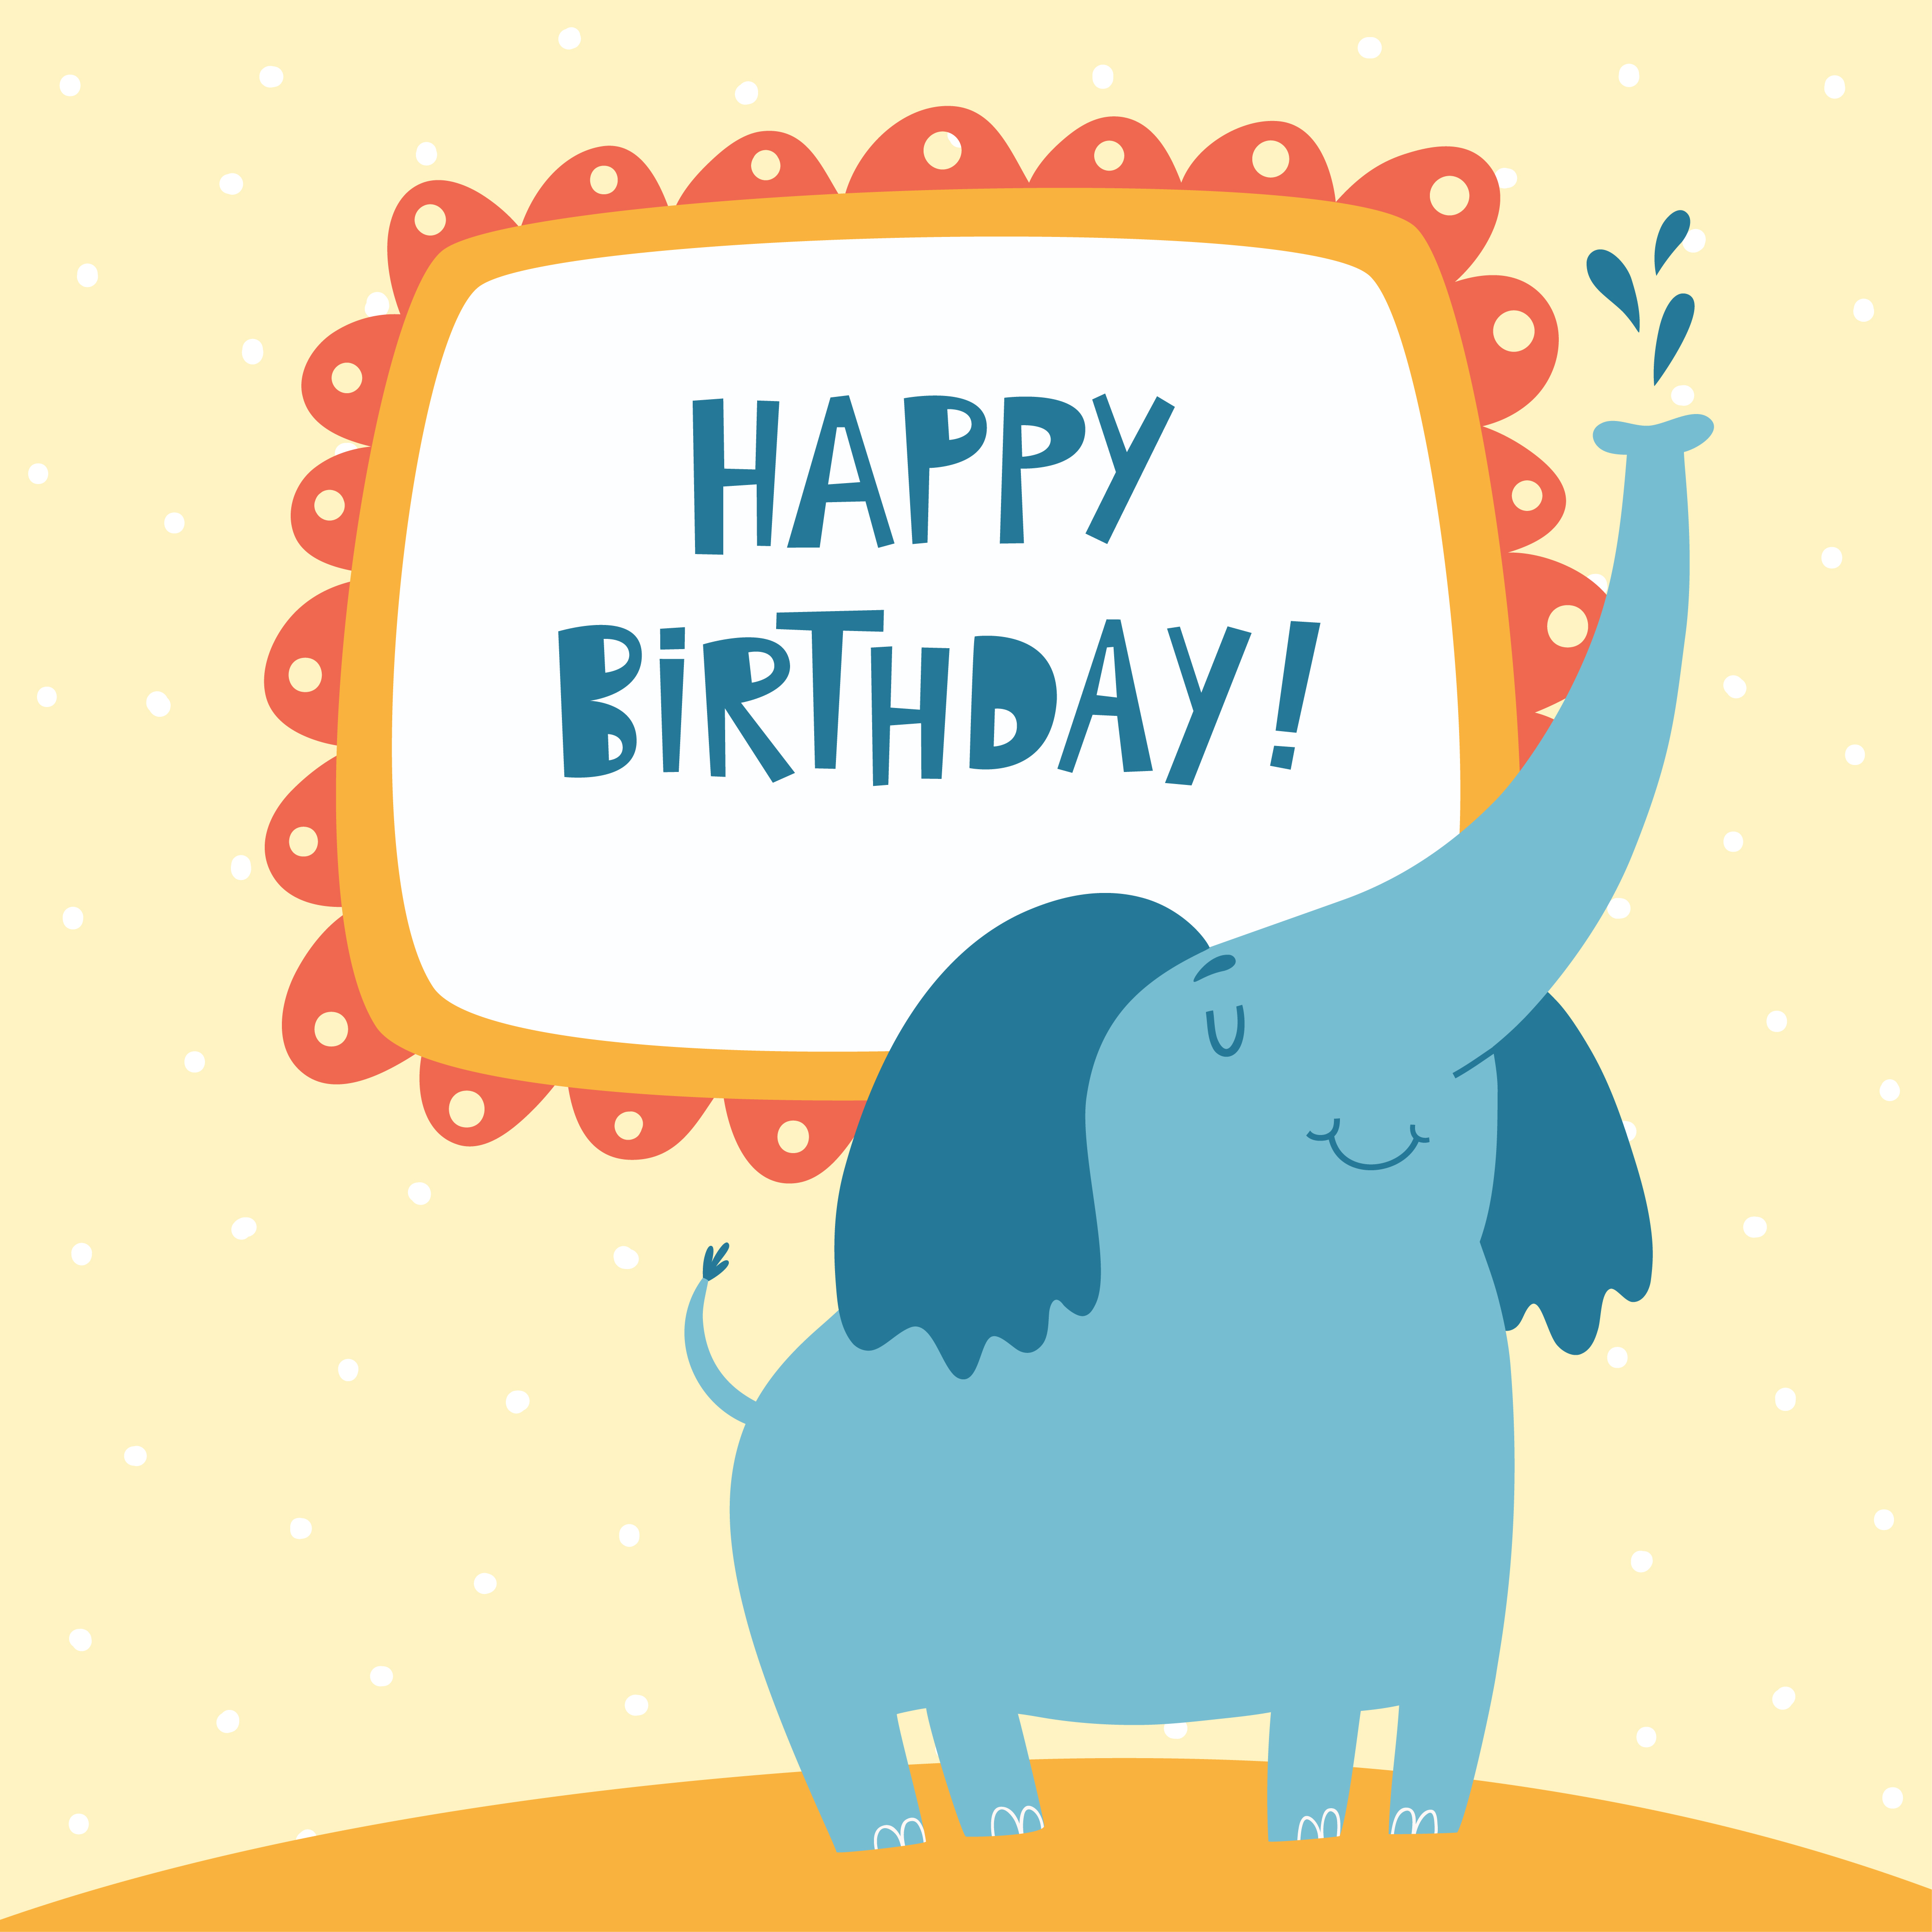 Happy Birthday card with cute elephant Photoshop brush